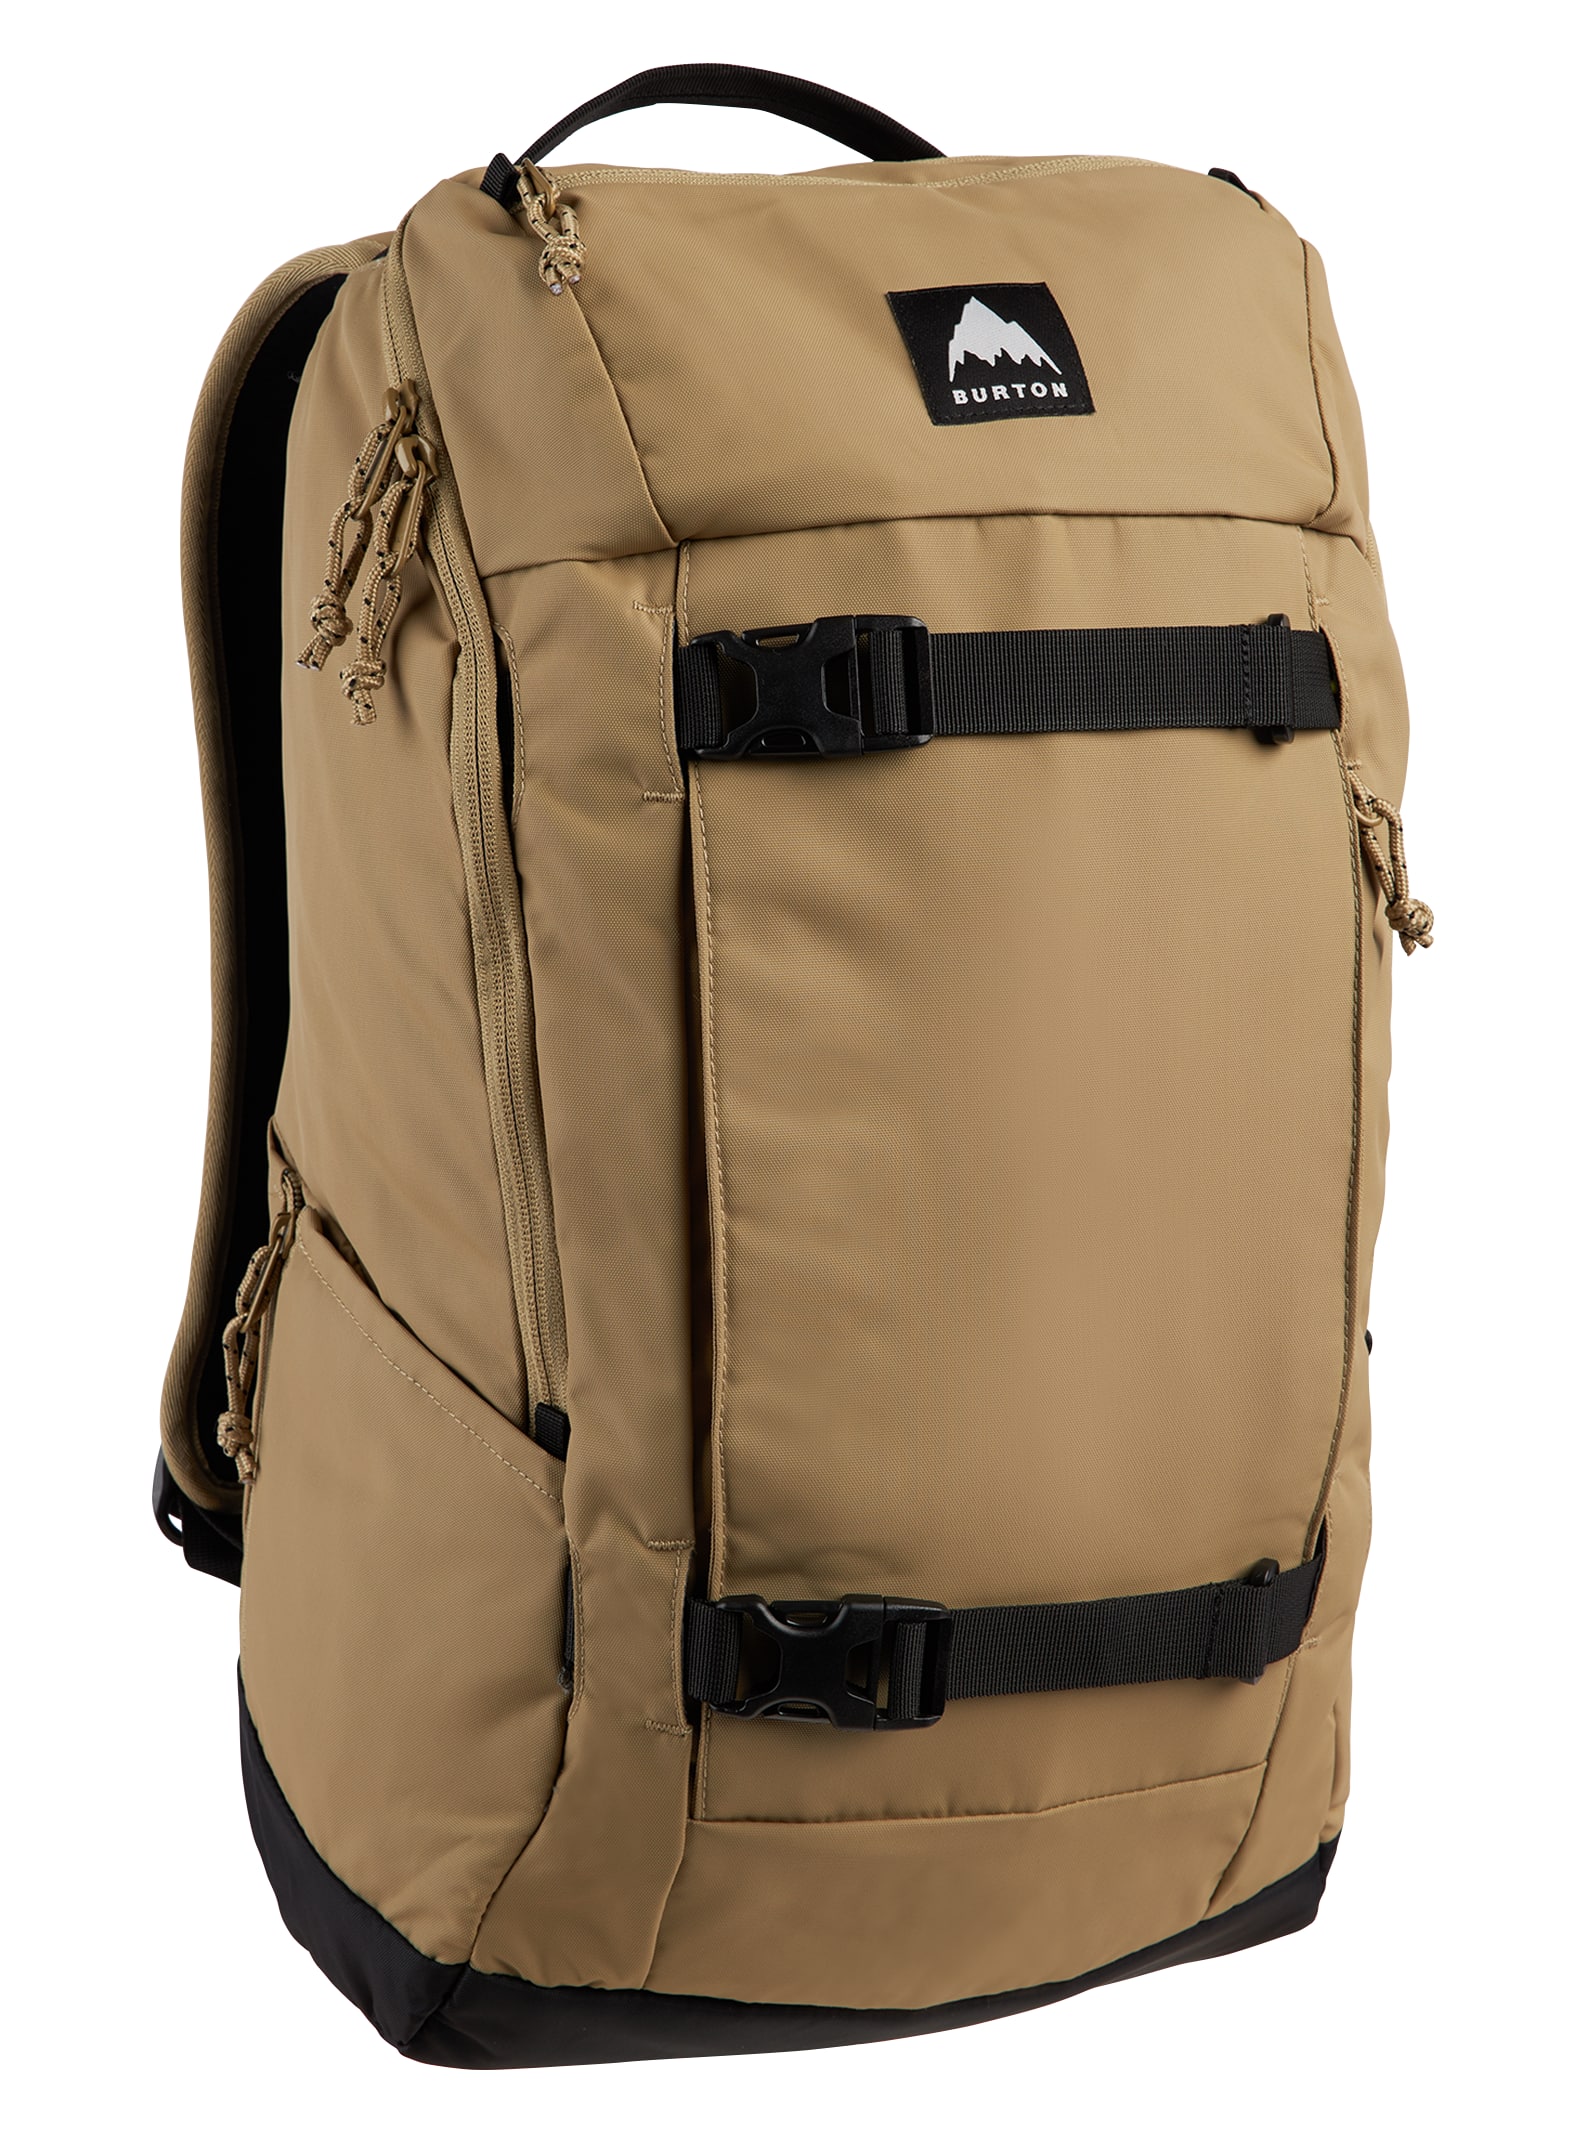 Burton Kilo 2.0 27L Backpack | Burton.com Spring 2022 US